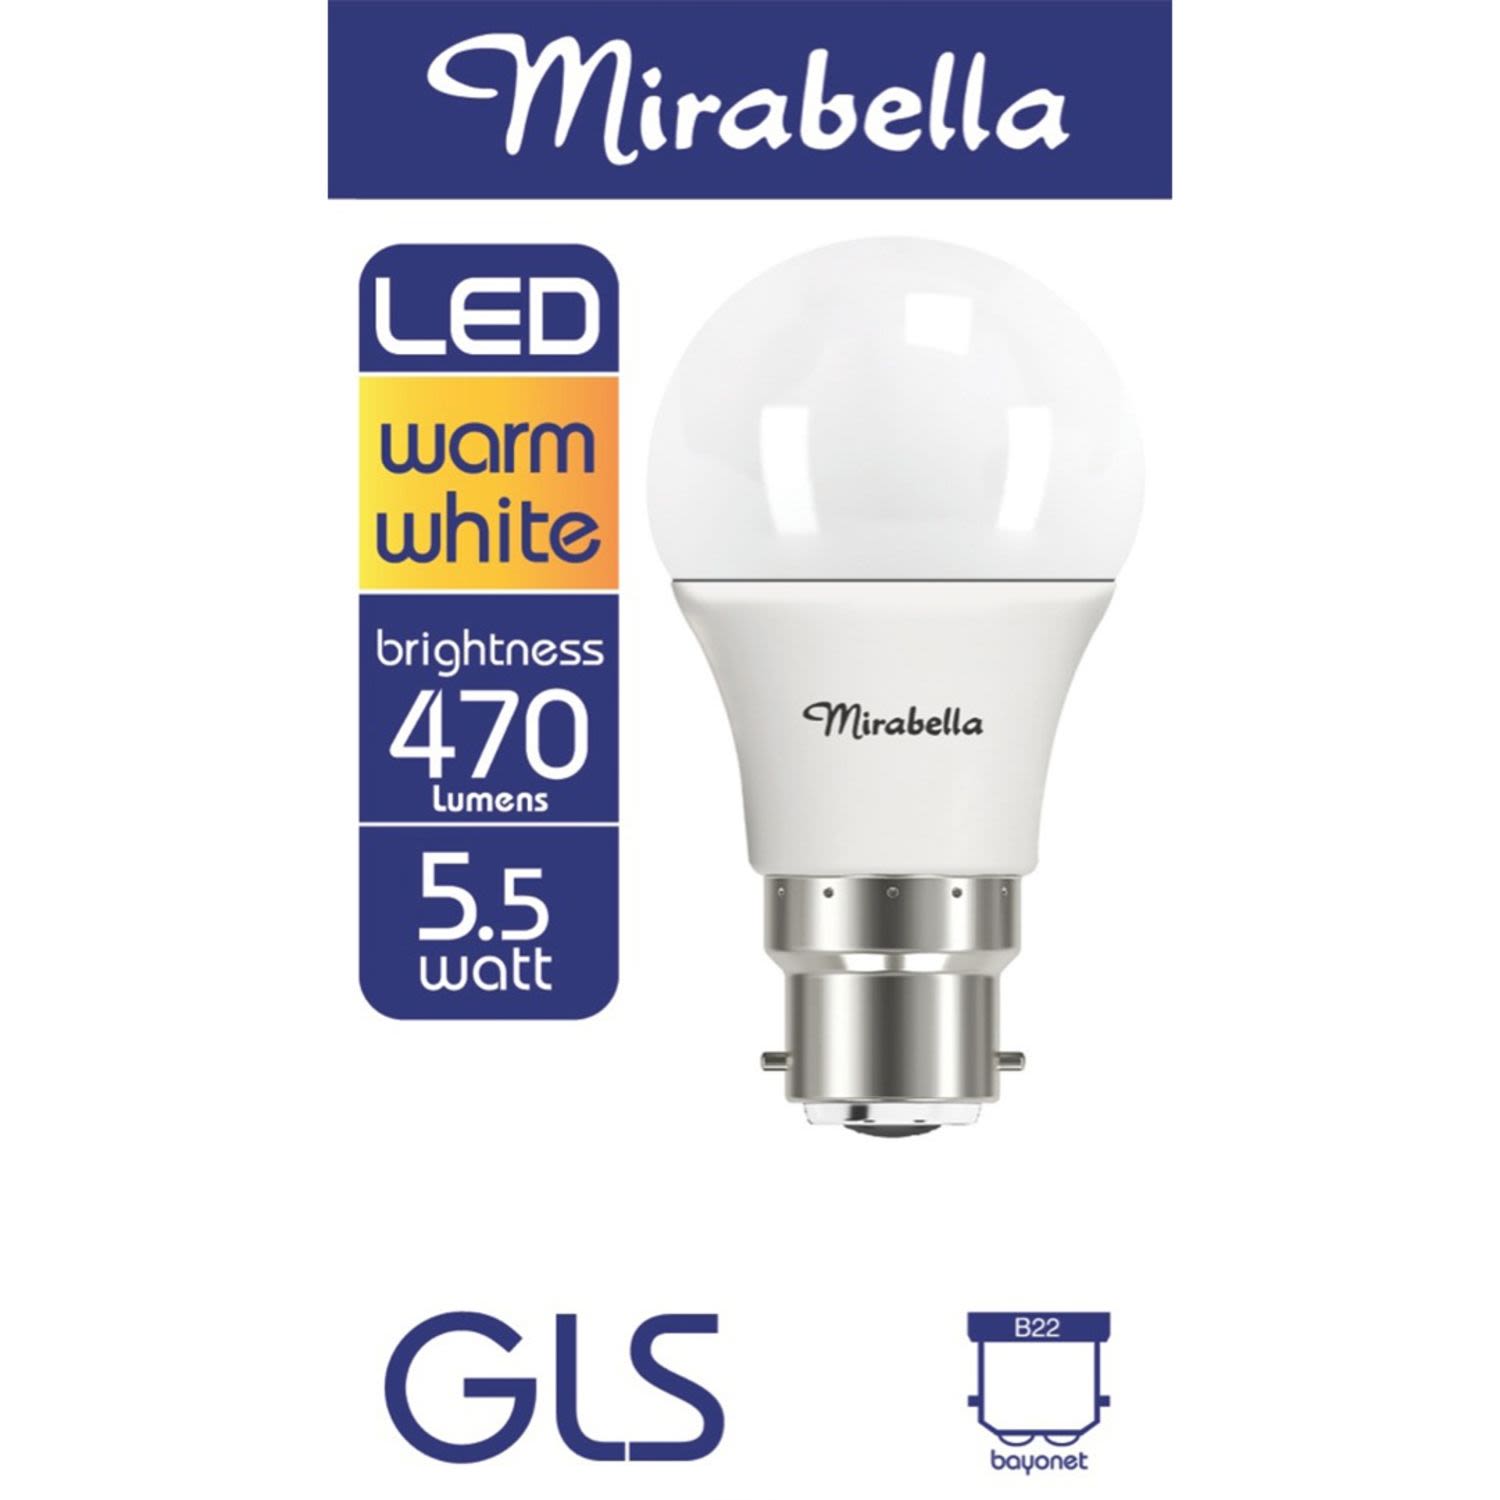 Mirabella LED 5.5W Warm White GLS Bayonet Cap Globe, 1 Each